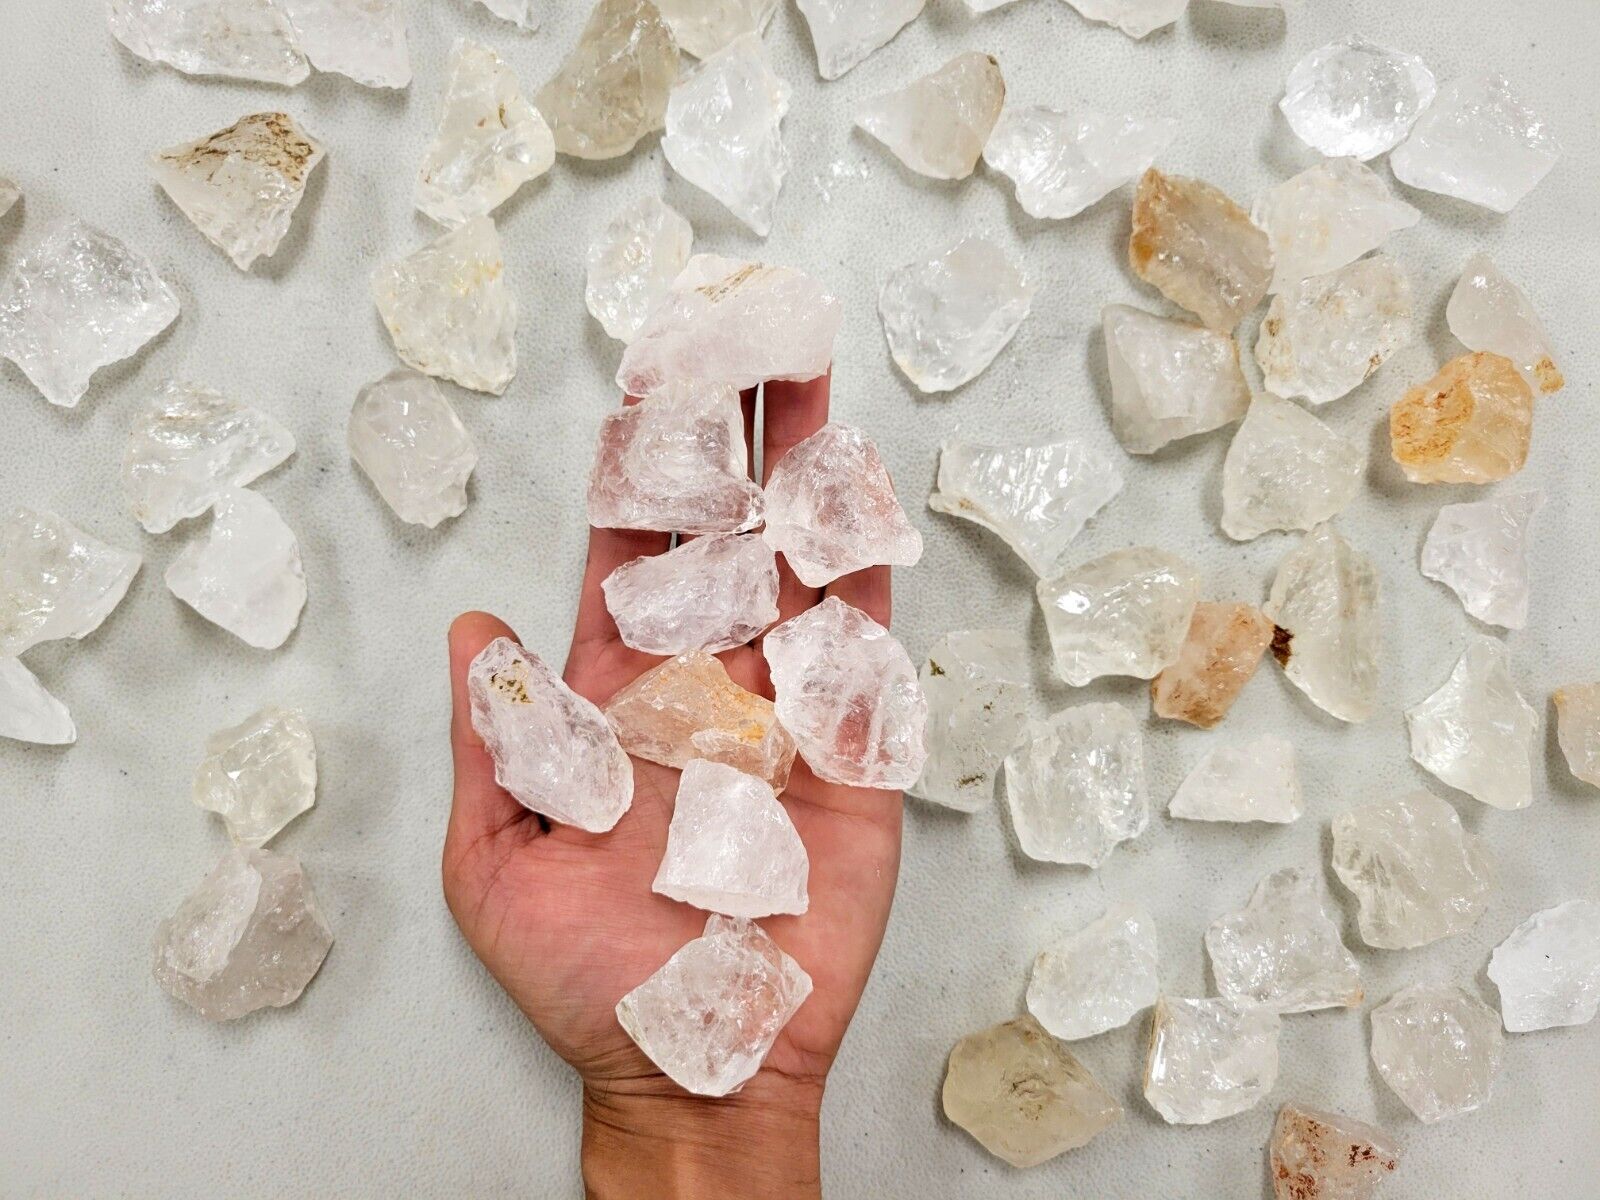 Rough Clear Quartz Crystals Bulk Rocks Minerals for Tumbling Reiki Crafting